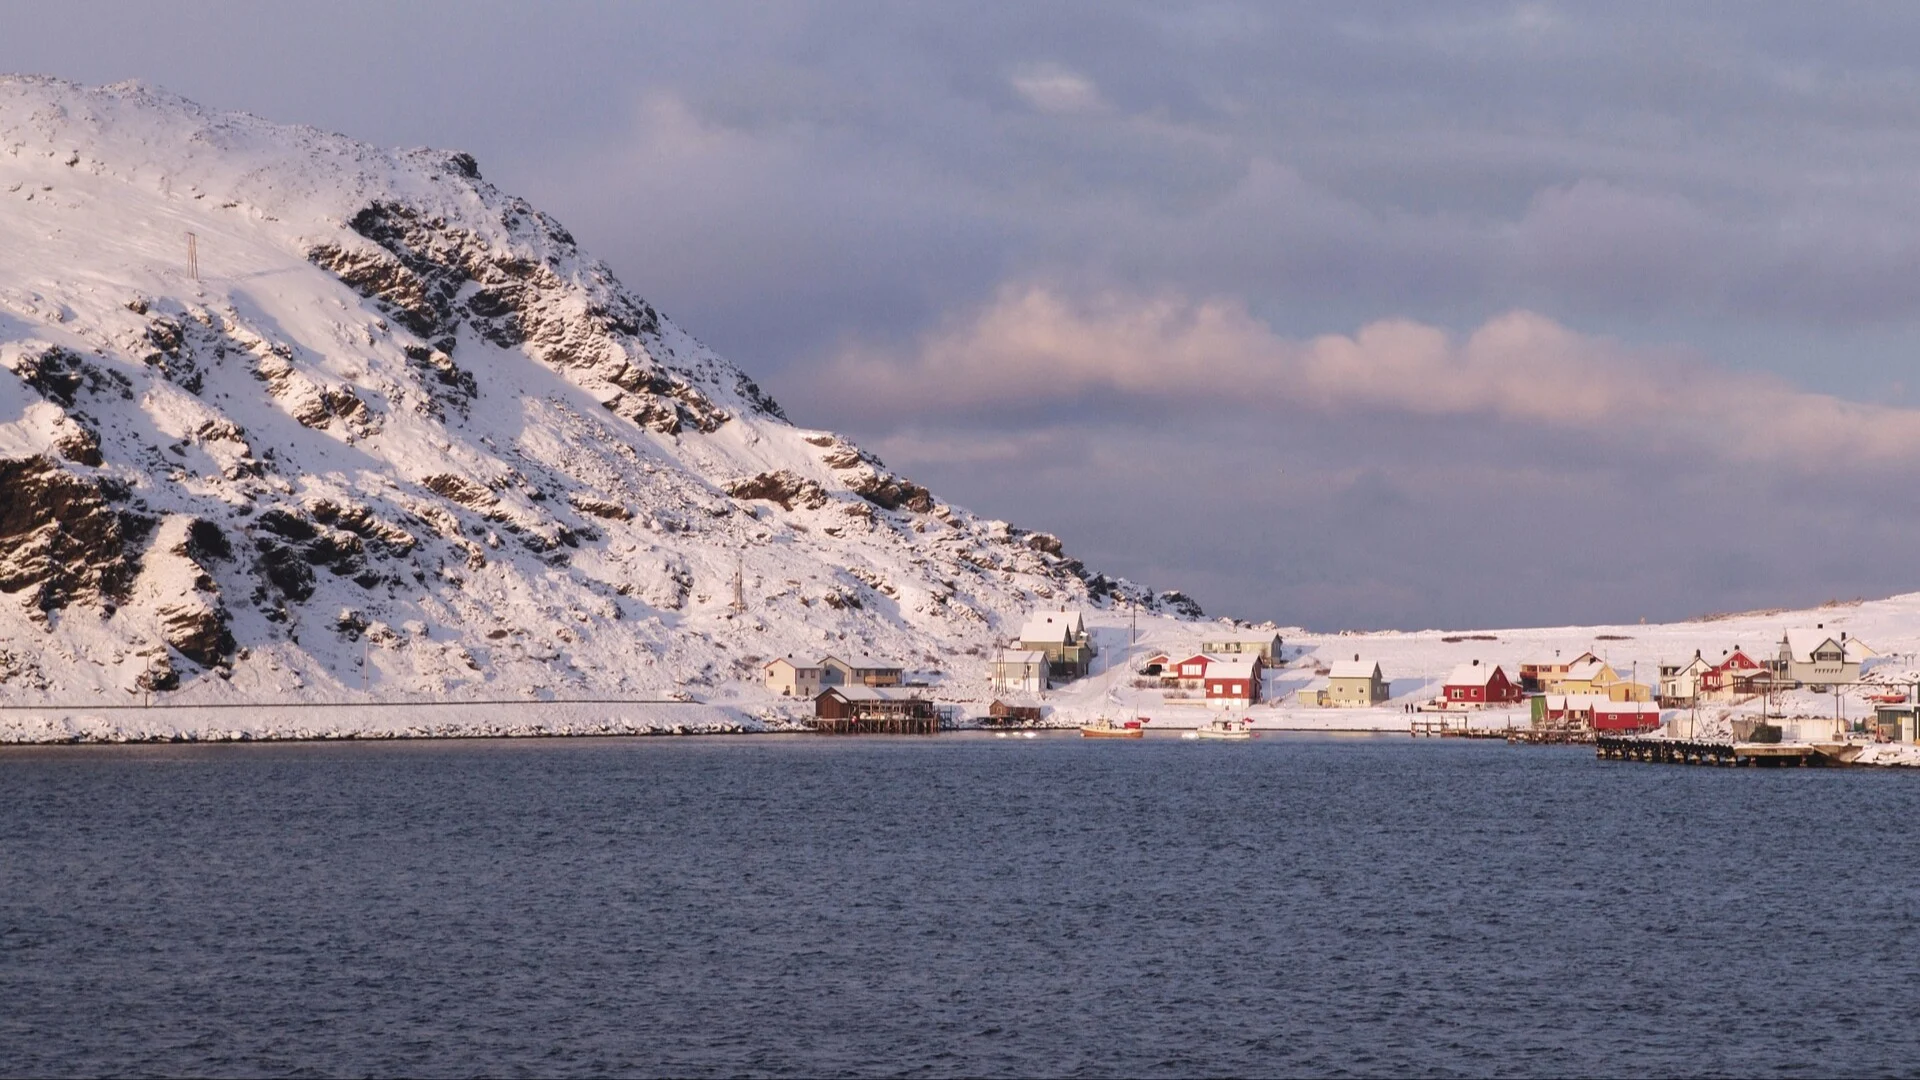 The Norwegian port of Havoysund in winter